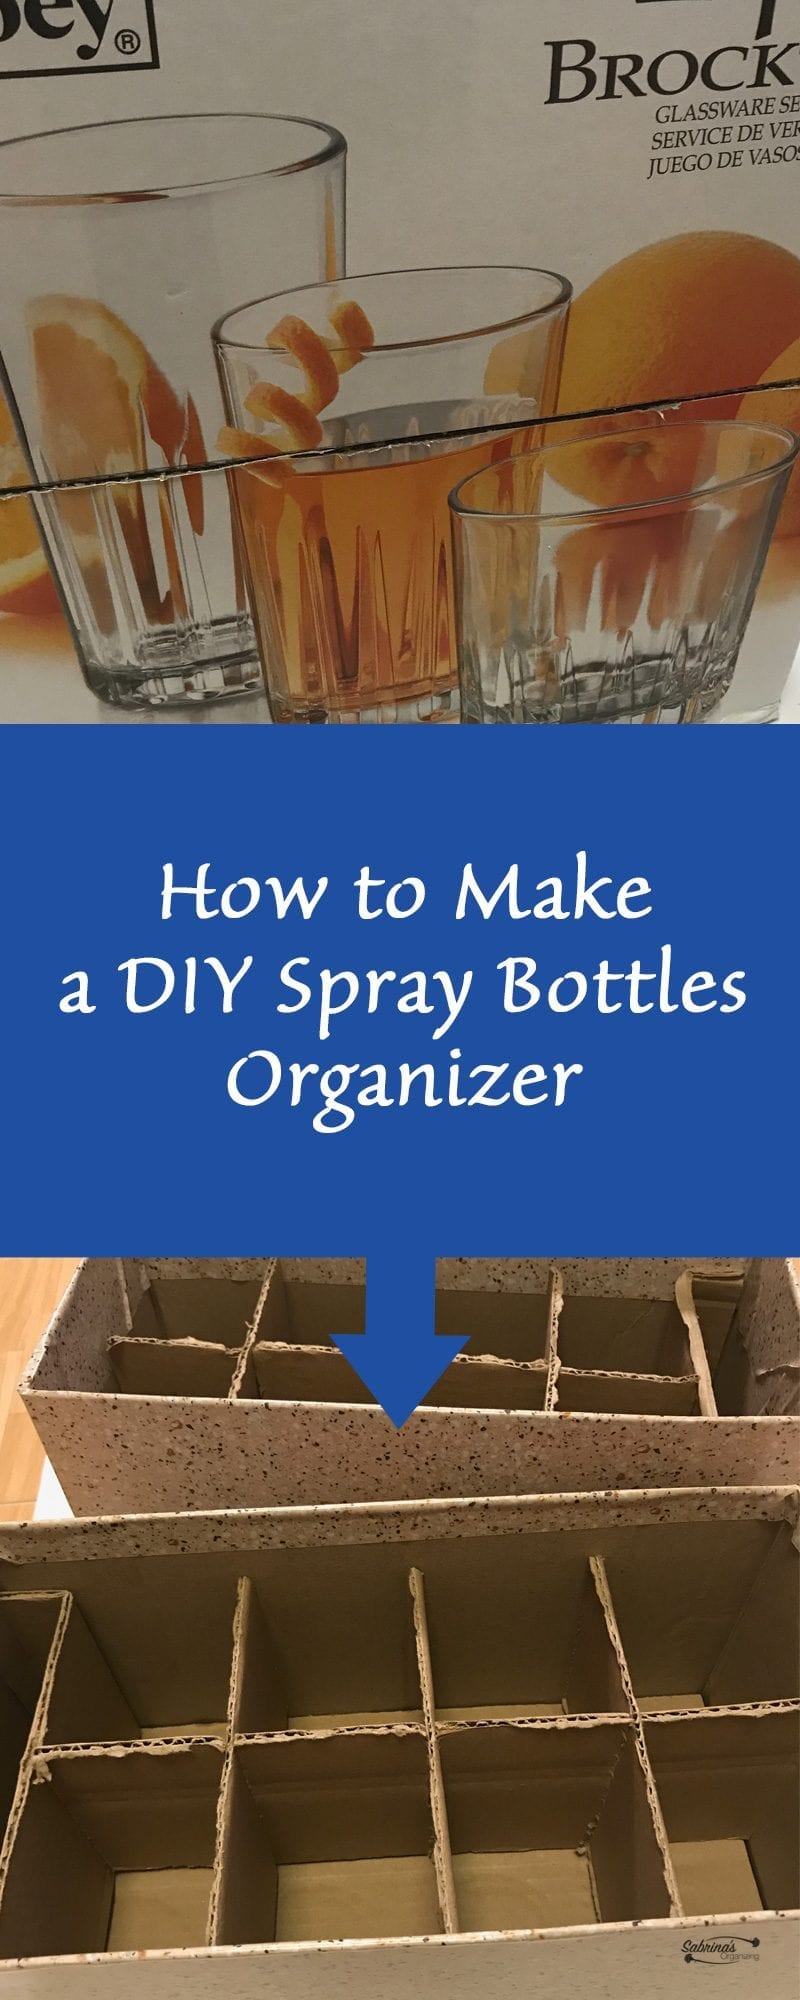 How to Make A DIY Spray Bottles Organizer